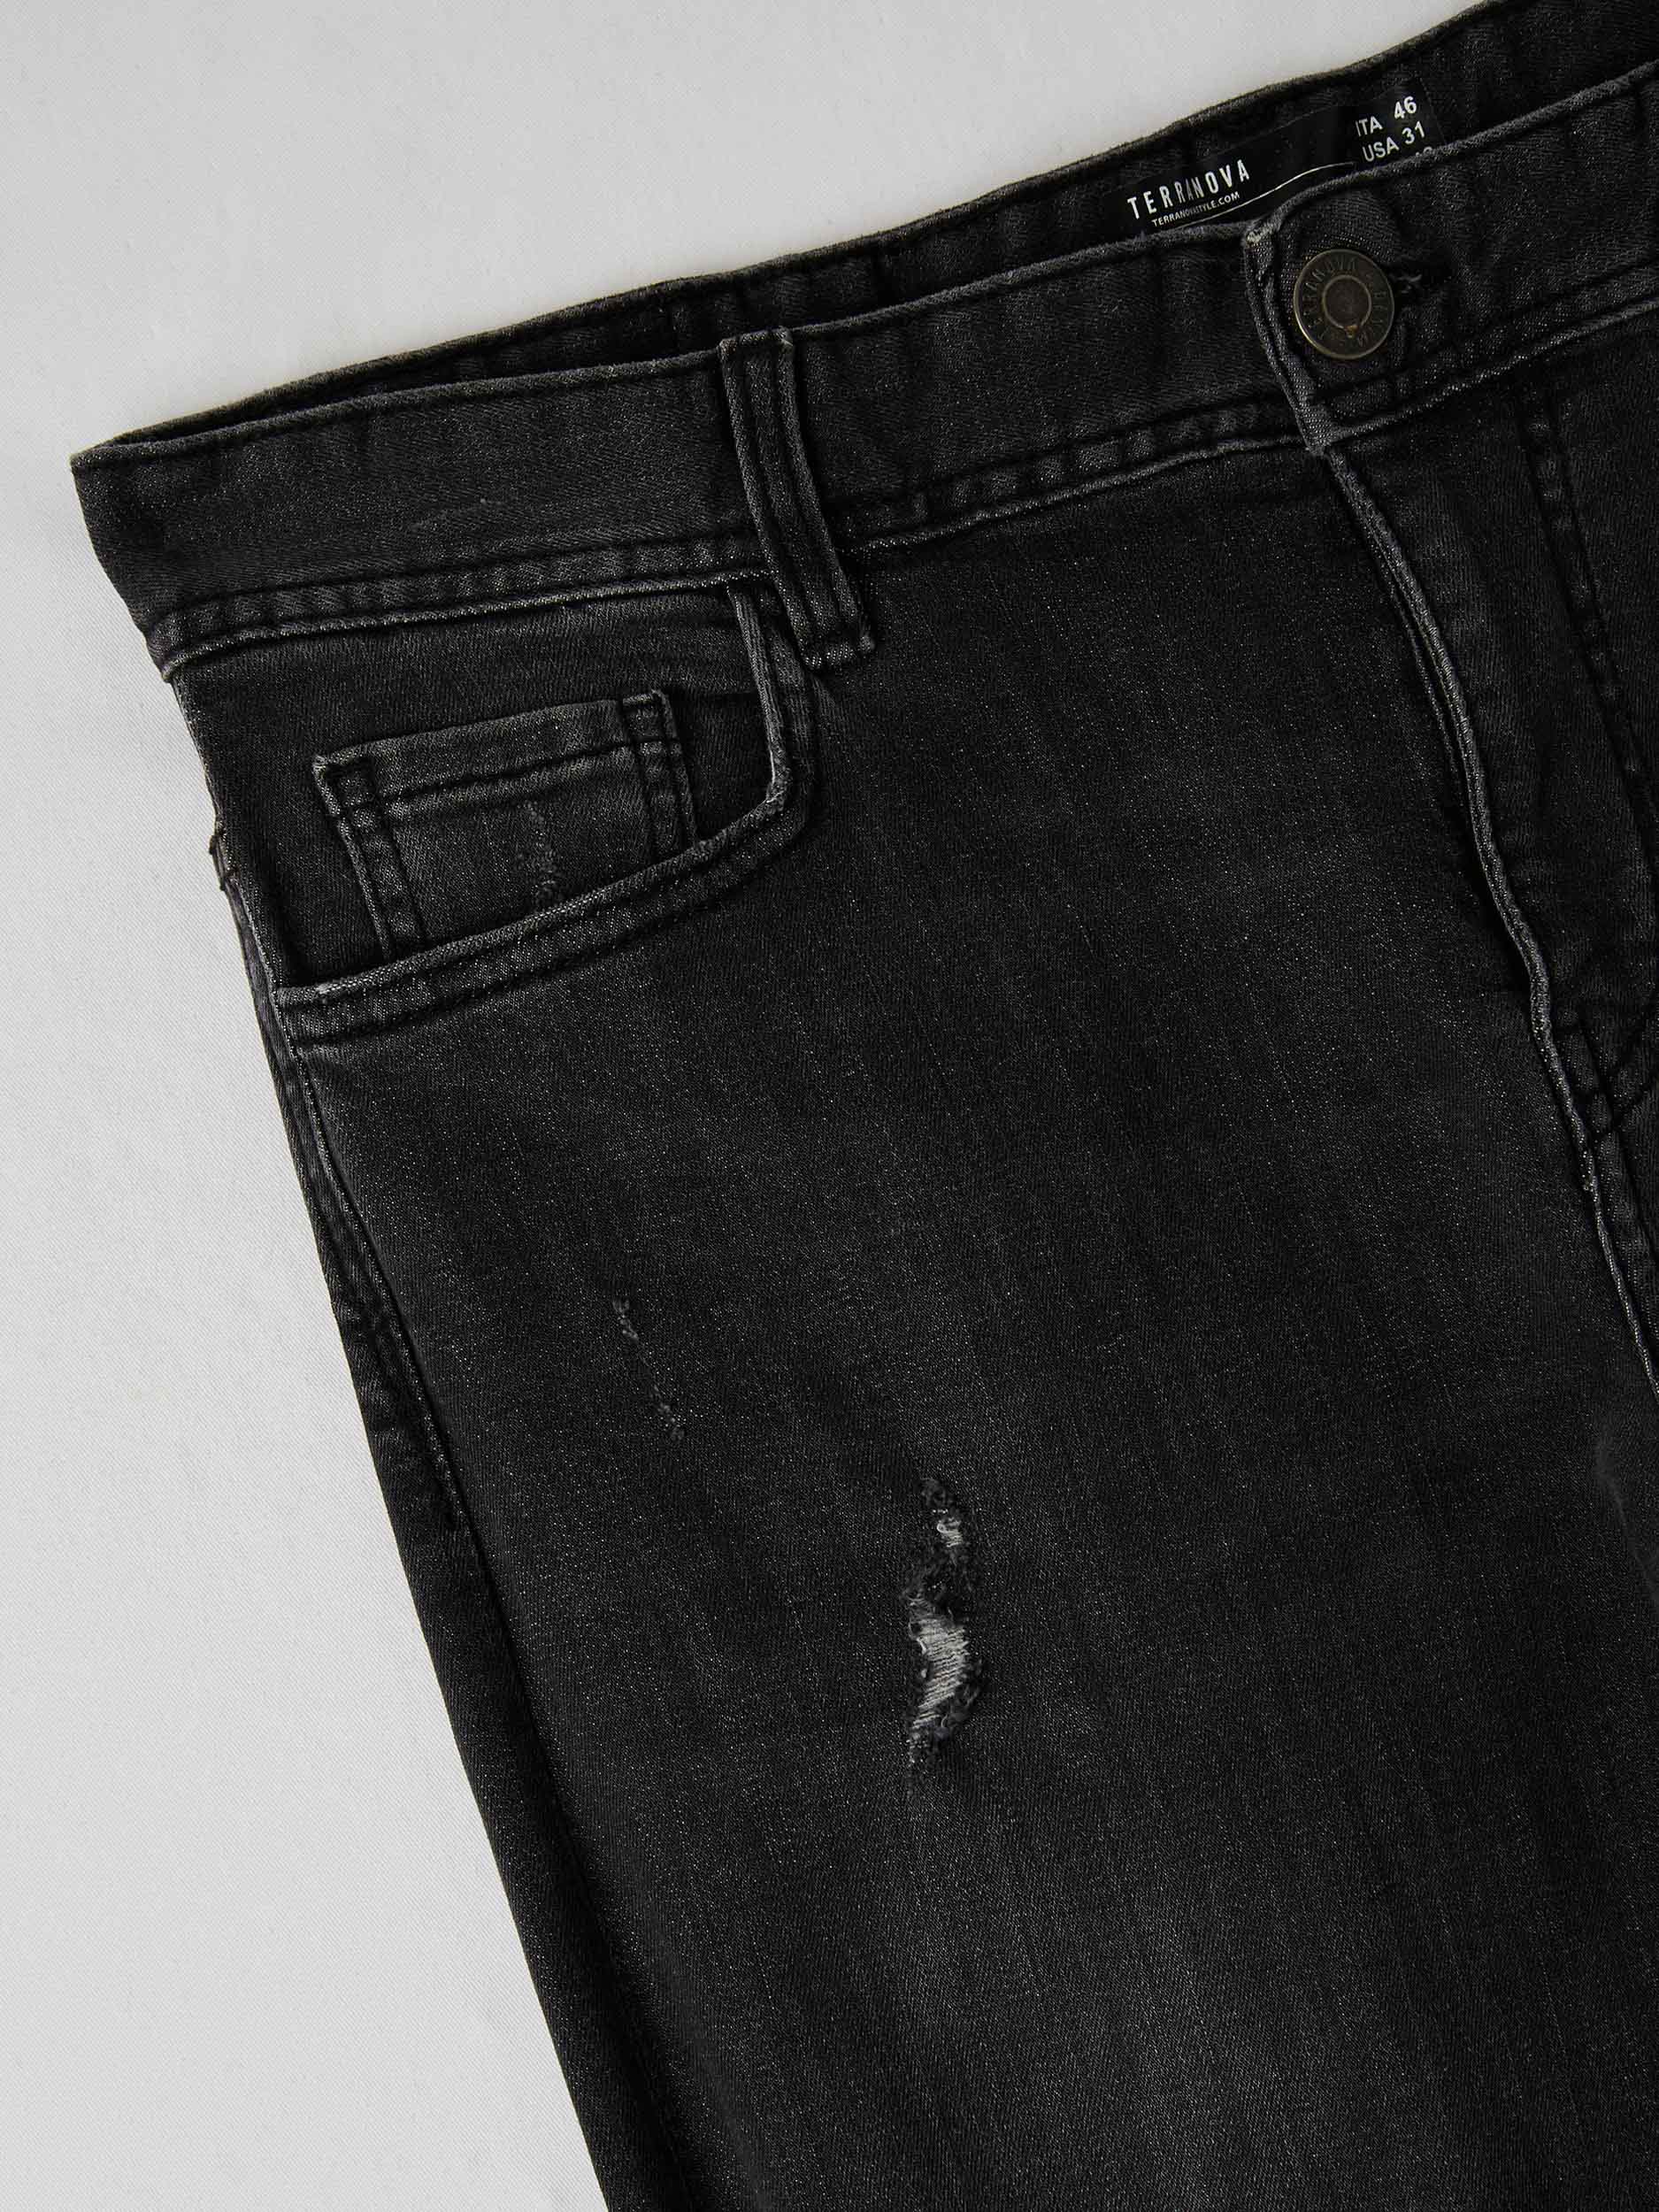 shredded skinny jeans